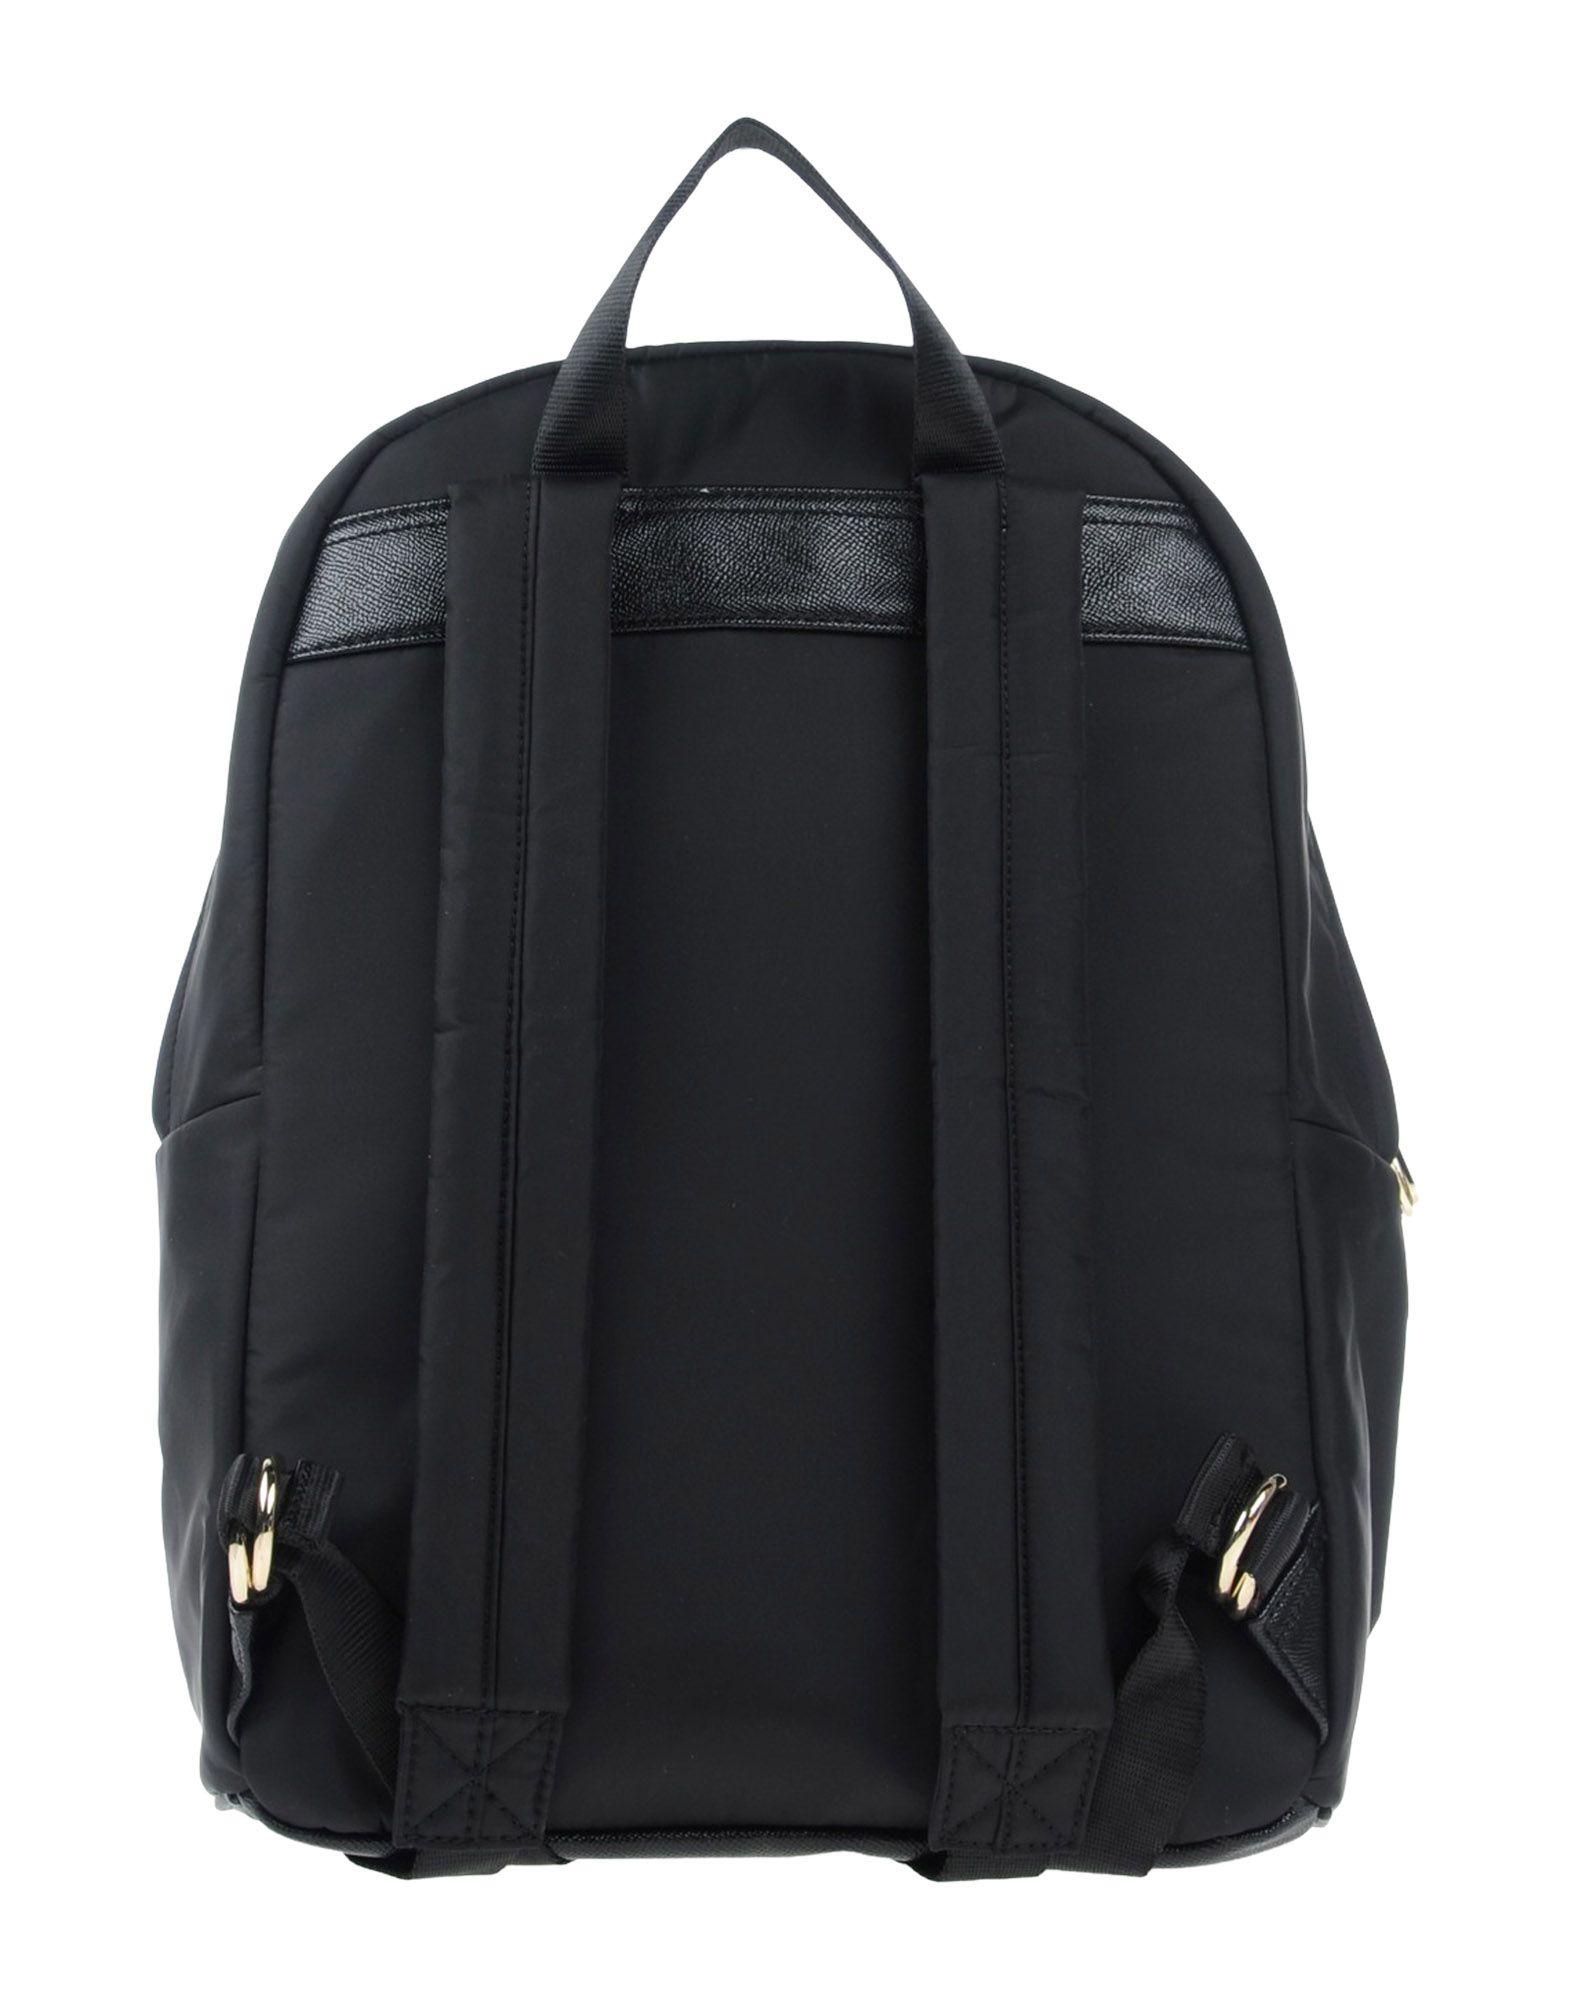 Lyst - Guess Backpacks & Bum Bags in Black for Men